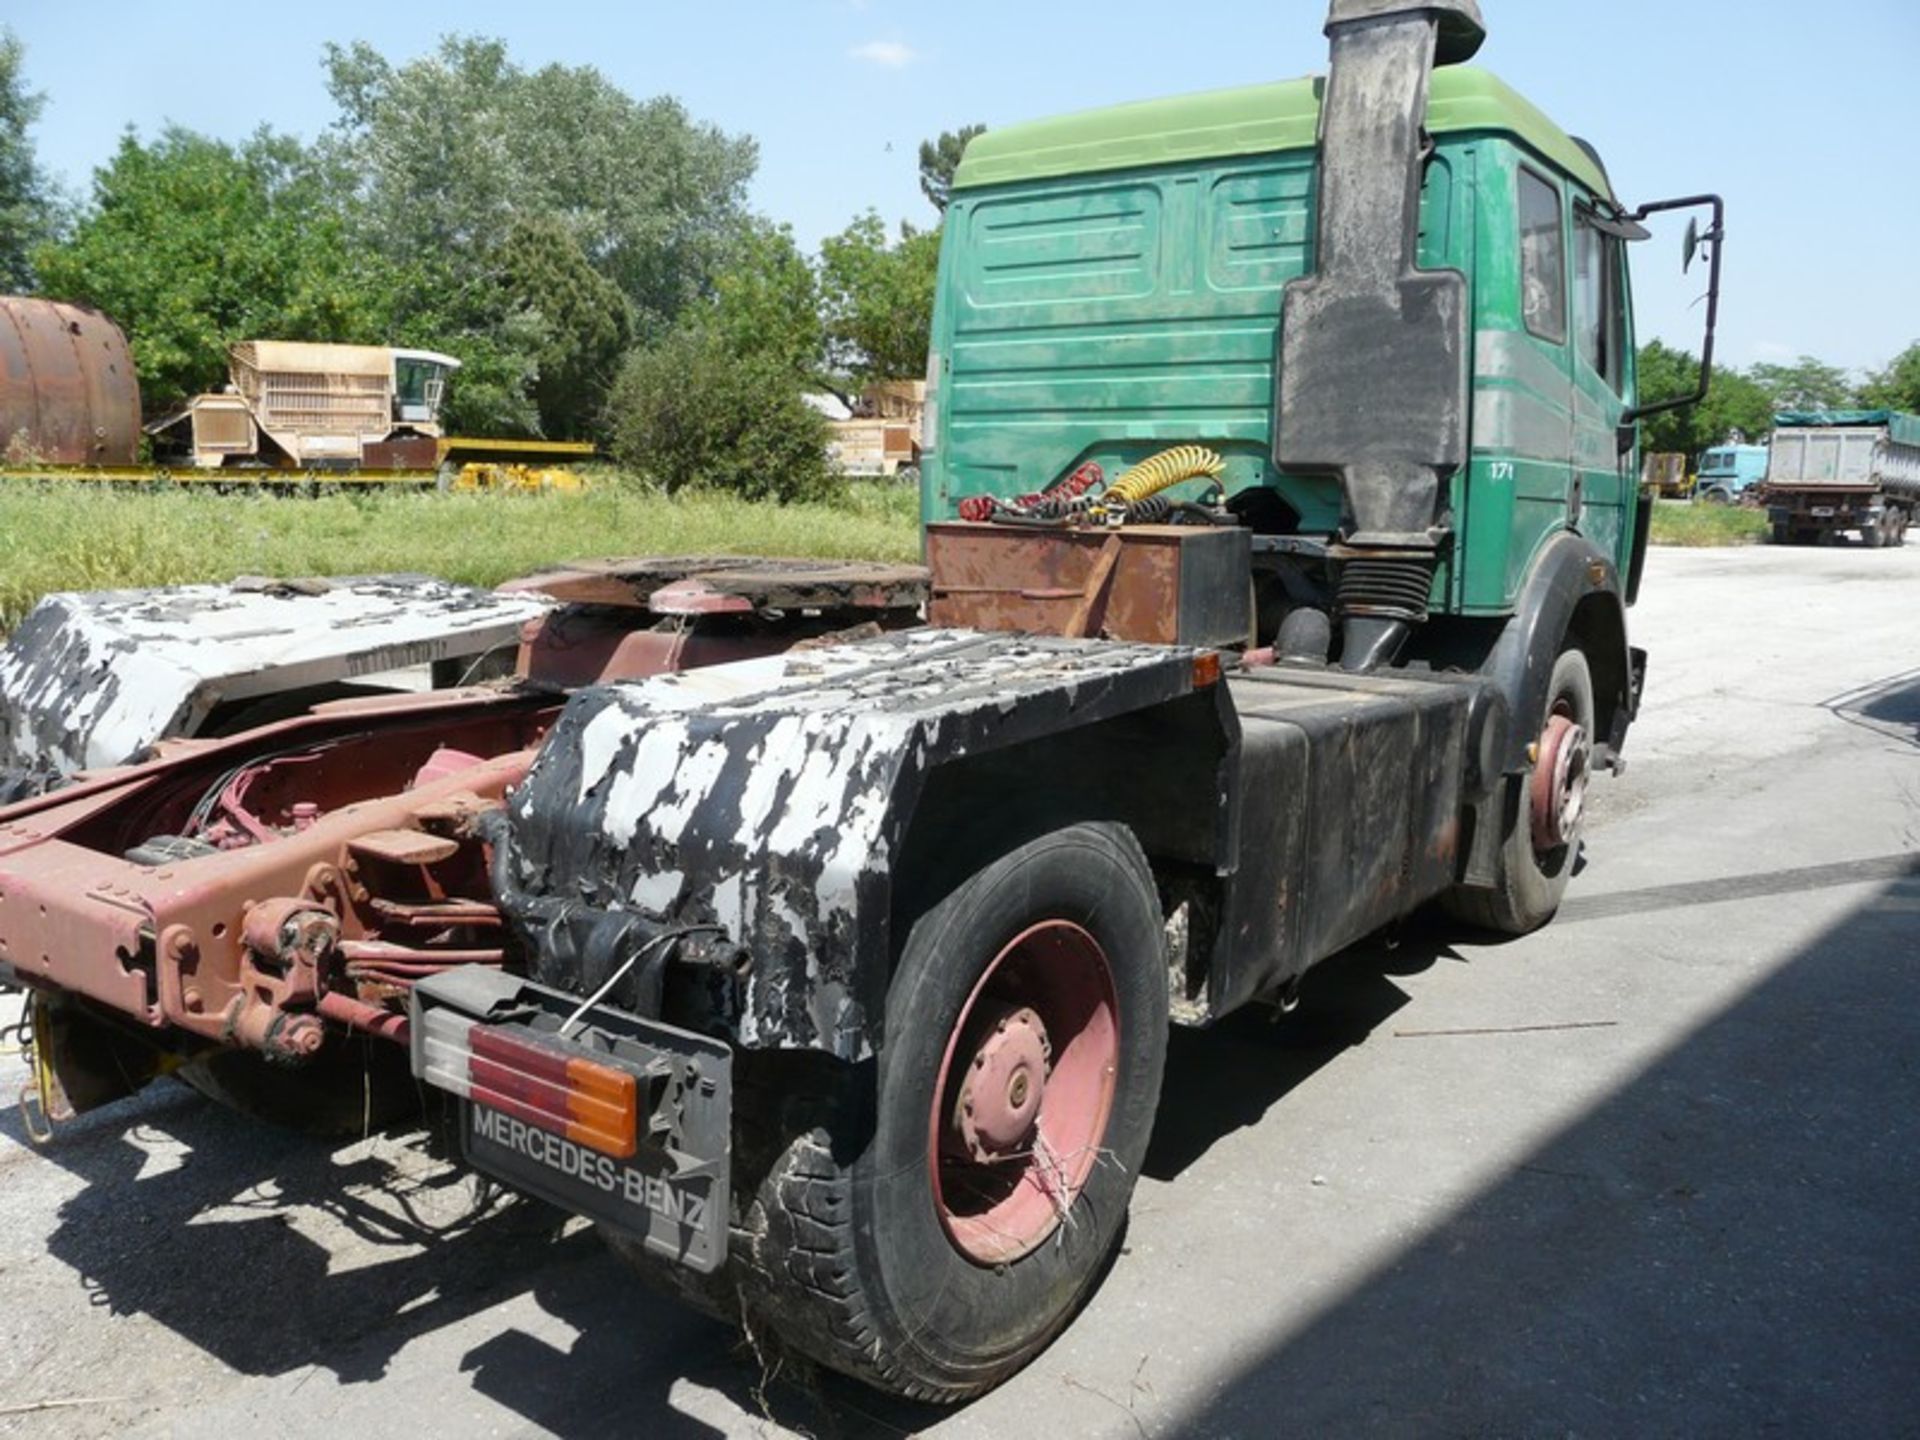 Tractor MERCEDES 1735, KM 183750, REG NBN 8221 (Located in Greece - Plati Imathias) Greek - Bild 4 aus 6